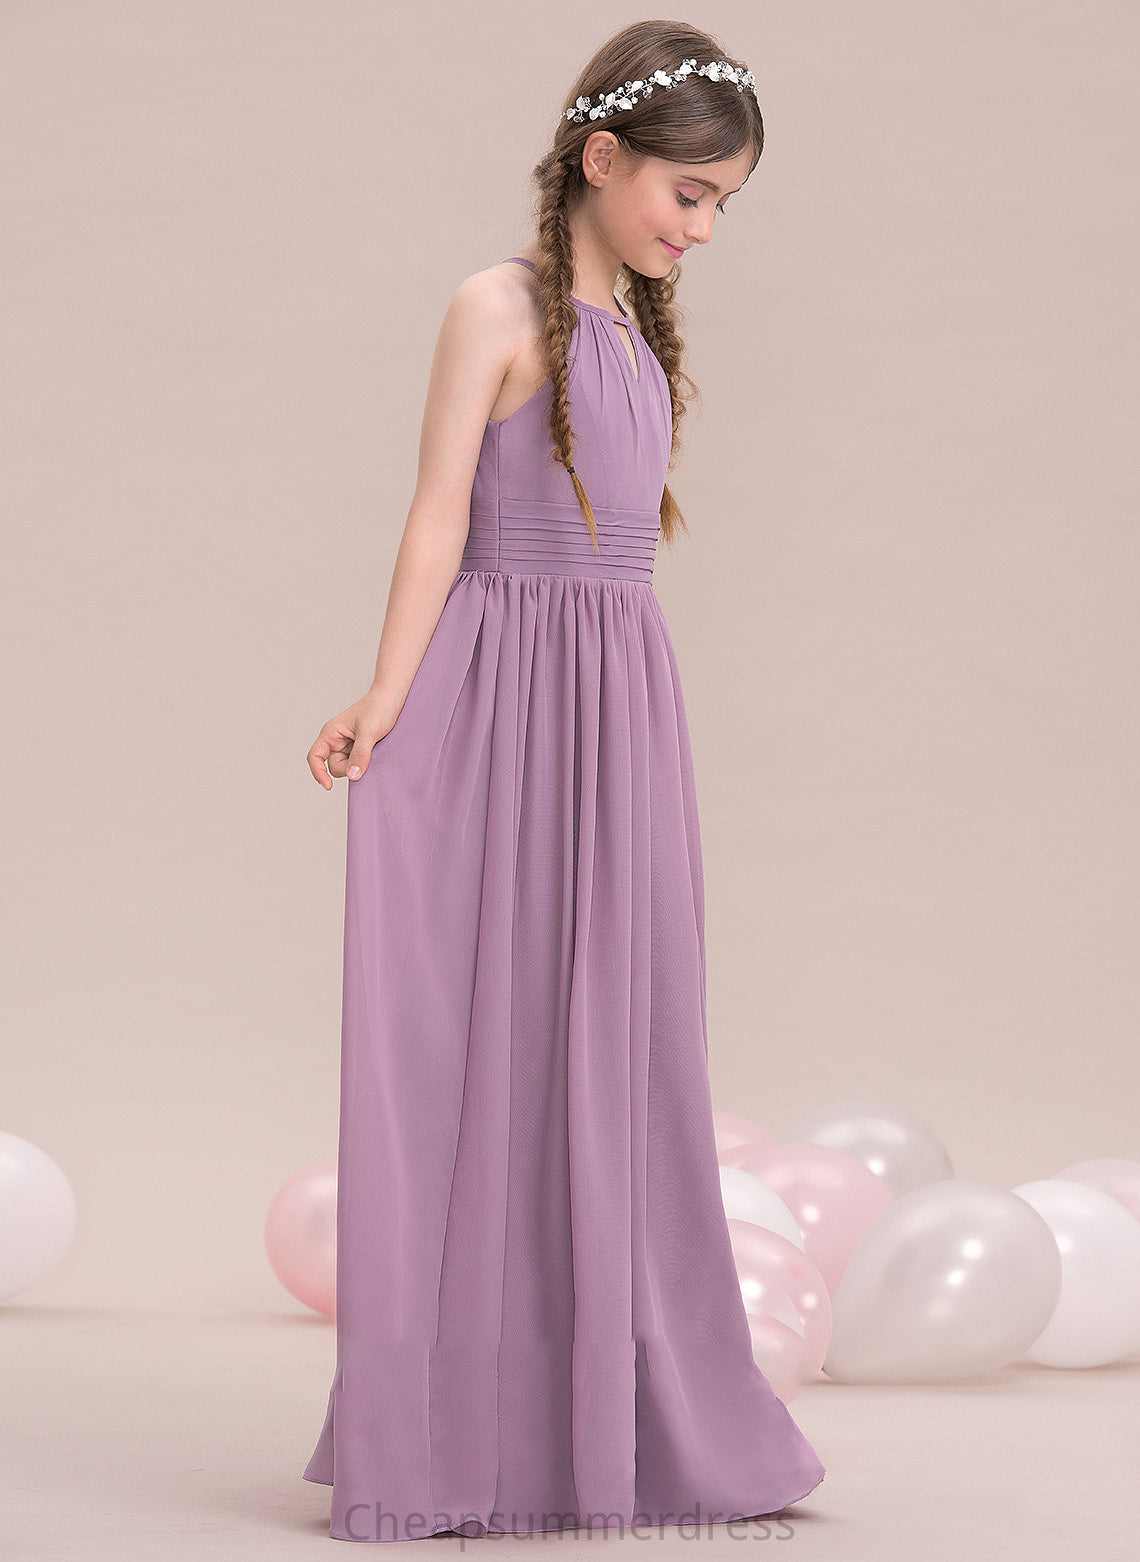 Lydia A-LineScoopNeckFloor-LengthChiffonJuniorBridesmaidDressWithRuffle#119580 Junior Bridesmaid Dresses